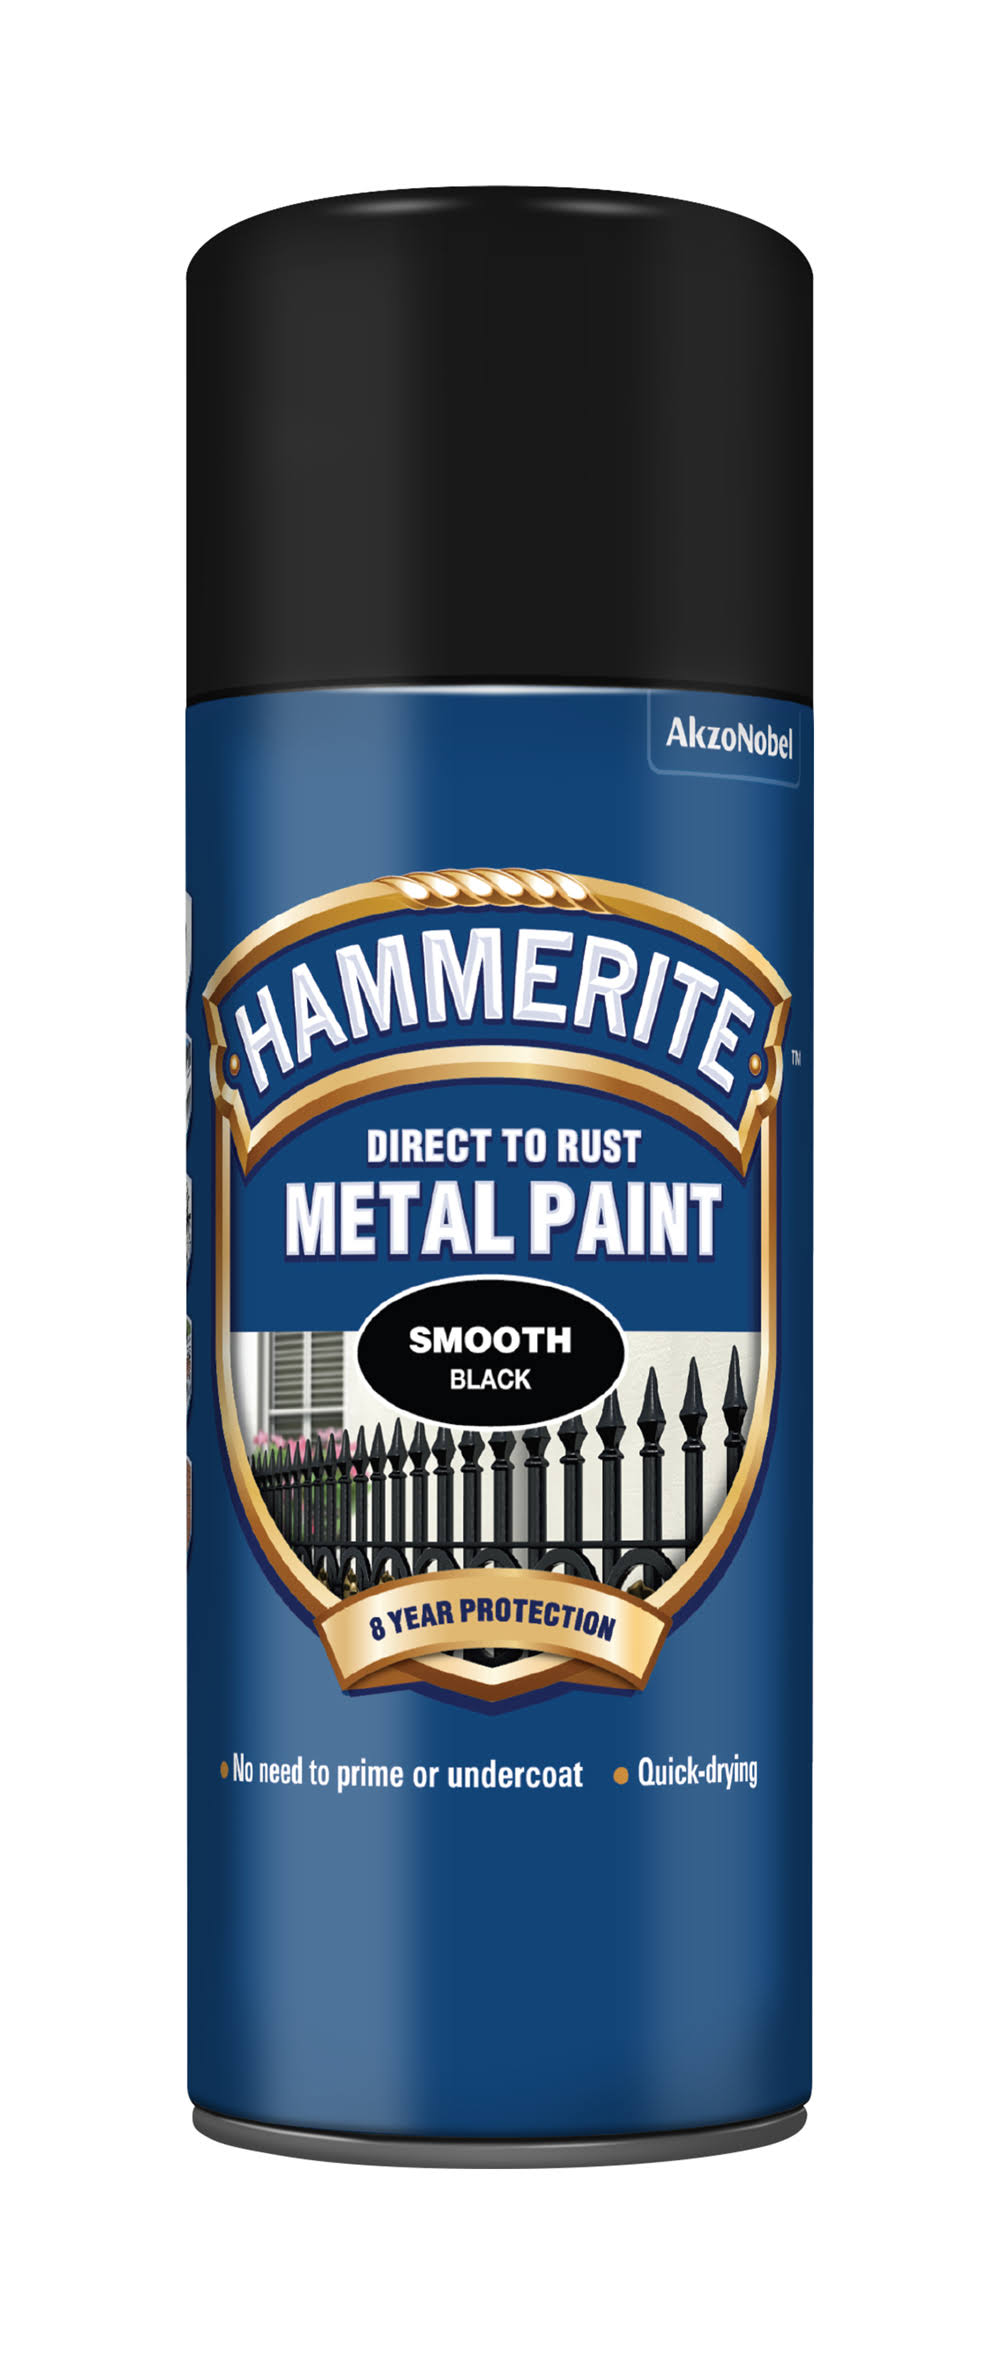 Hammerite Smoothrite Paint - Black, 400ml